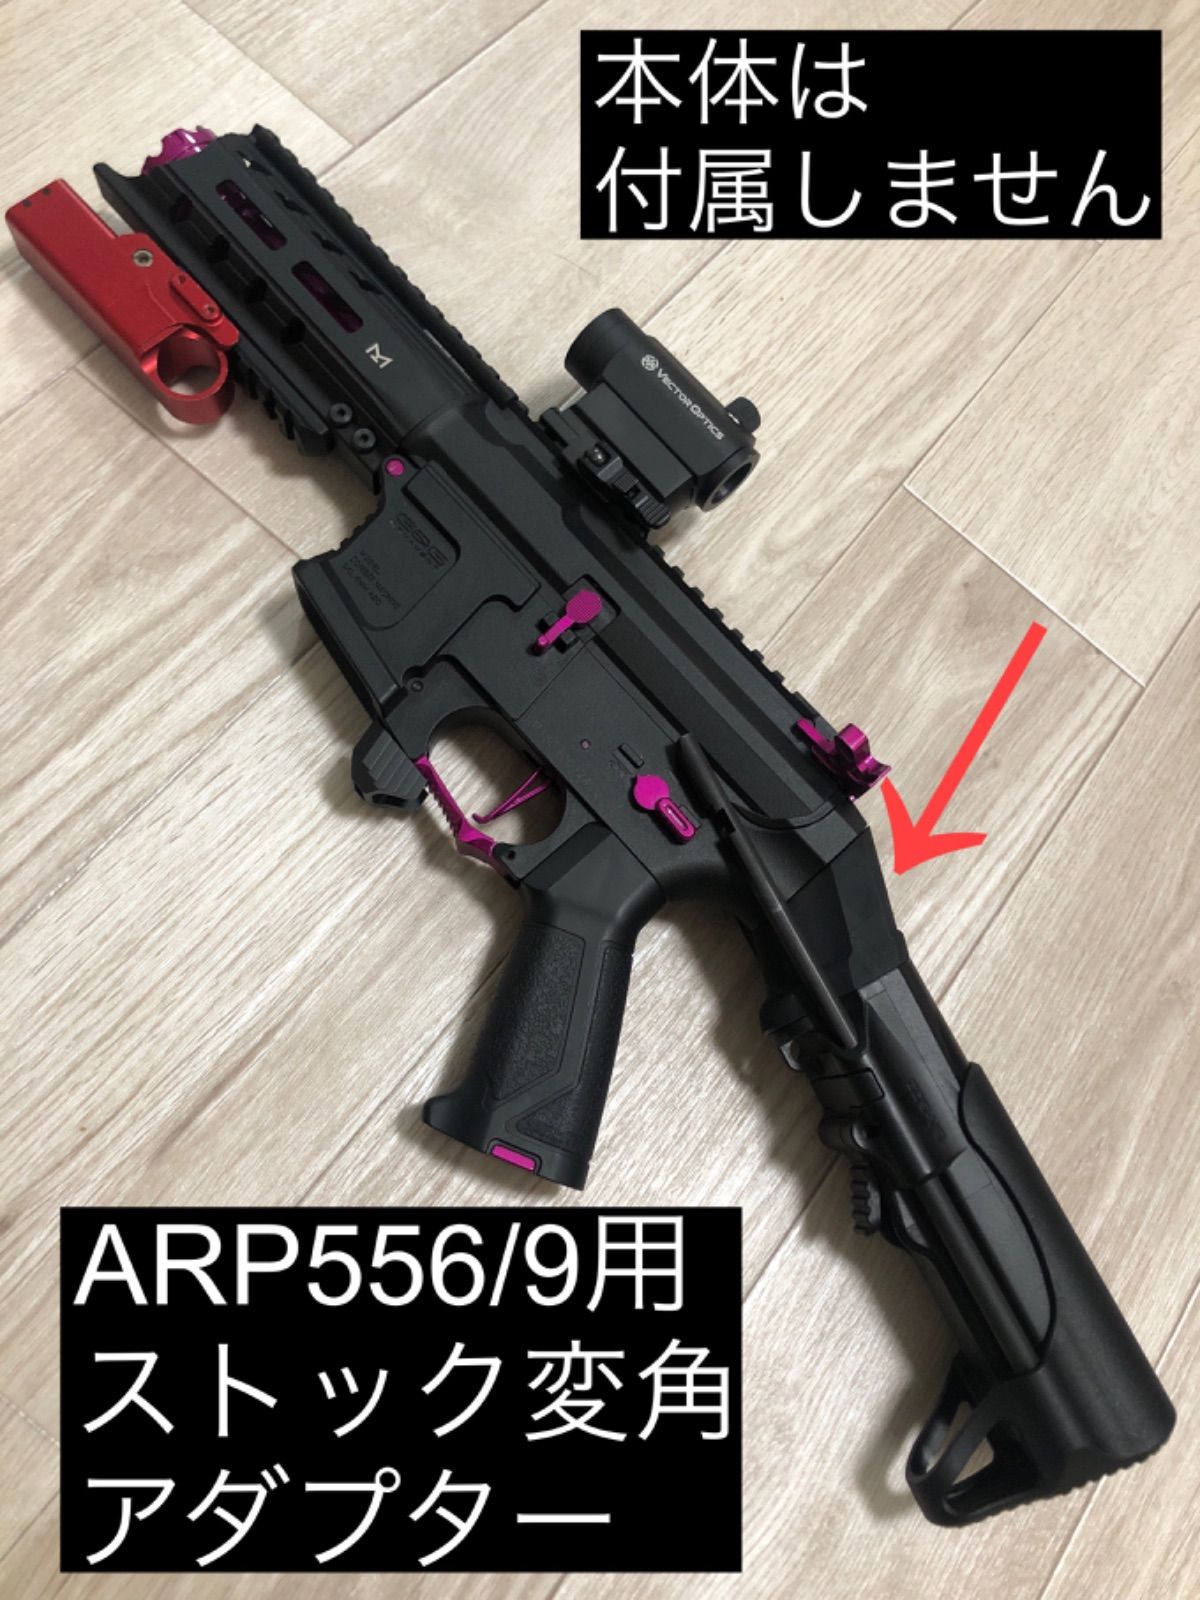 G&G ARP556 ARP9 ストックアダプター - メルカリ